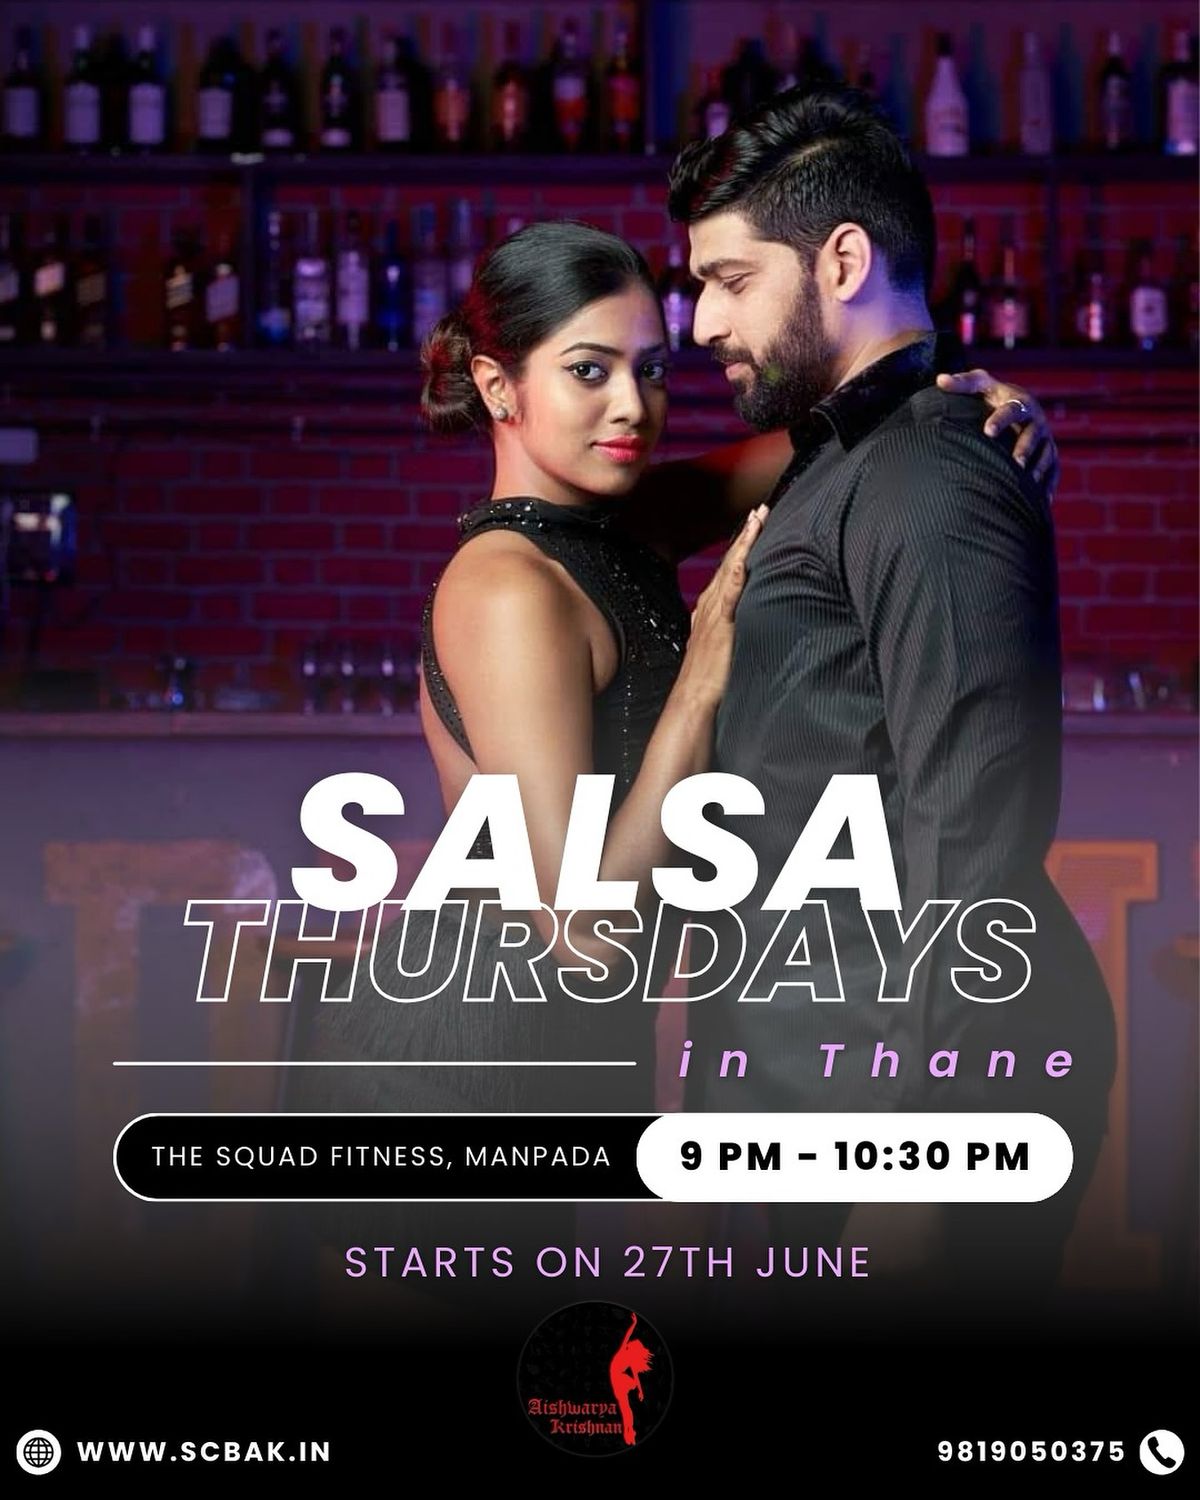 Salsa Thursdays in Thane